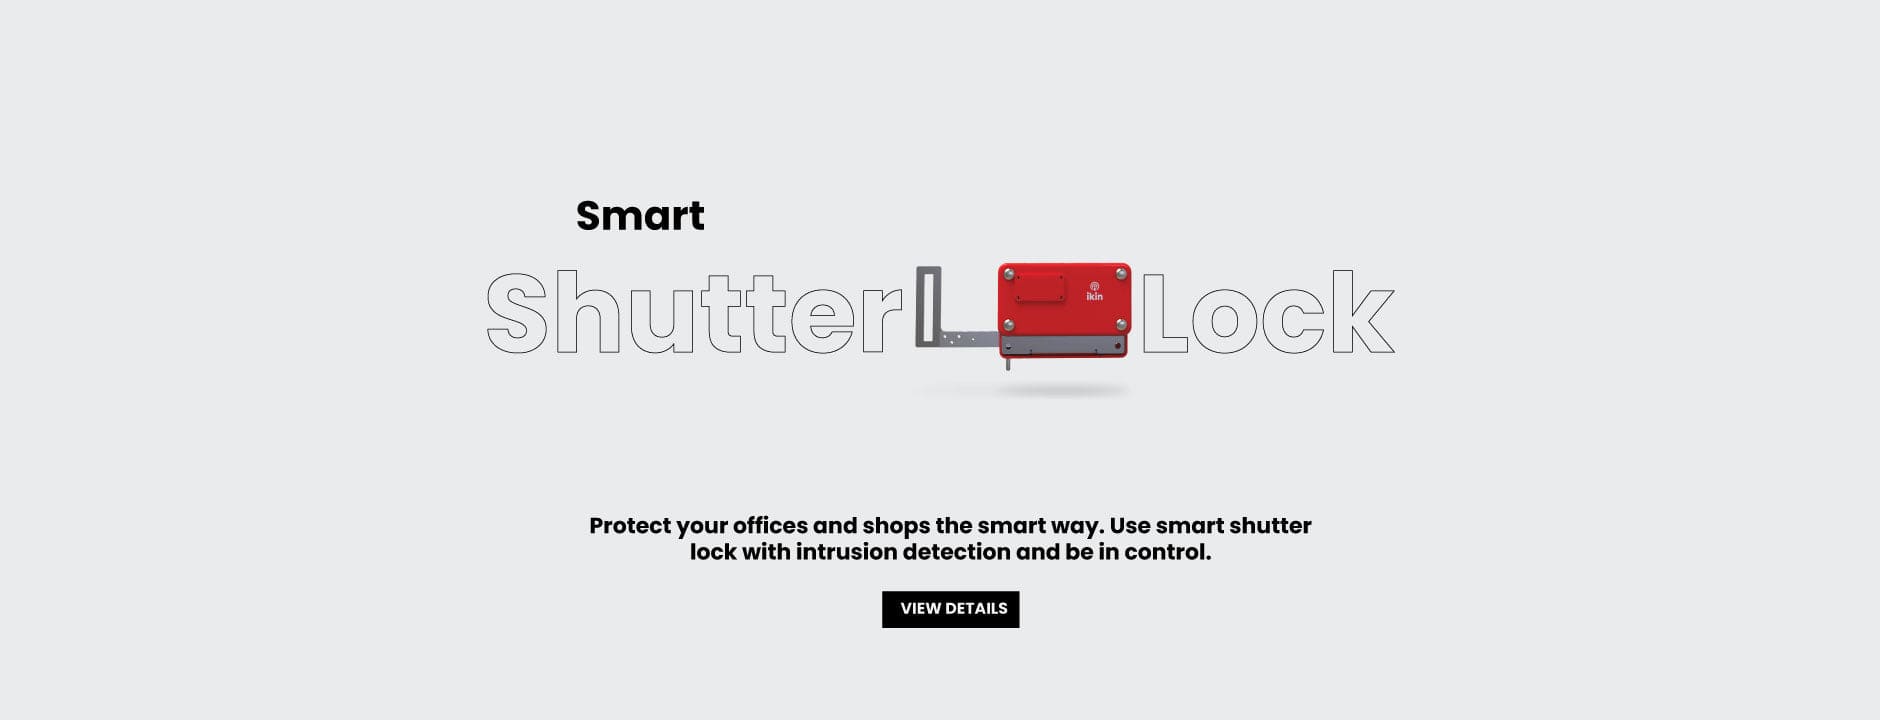 IKIN Home Page - Smart Shutter Lock Web Image